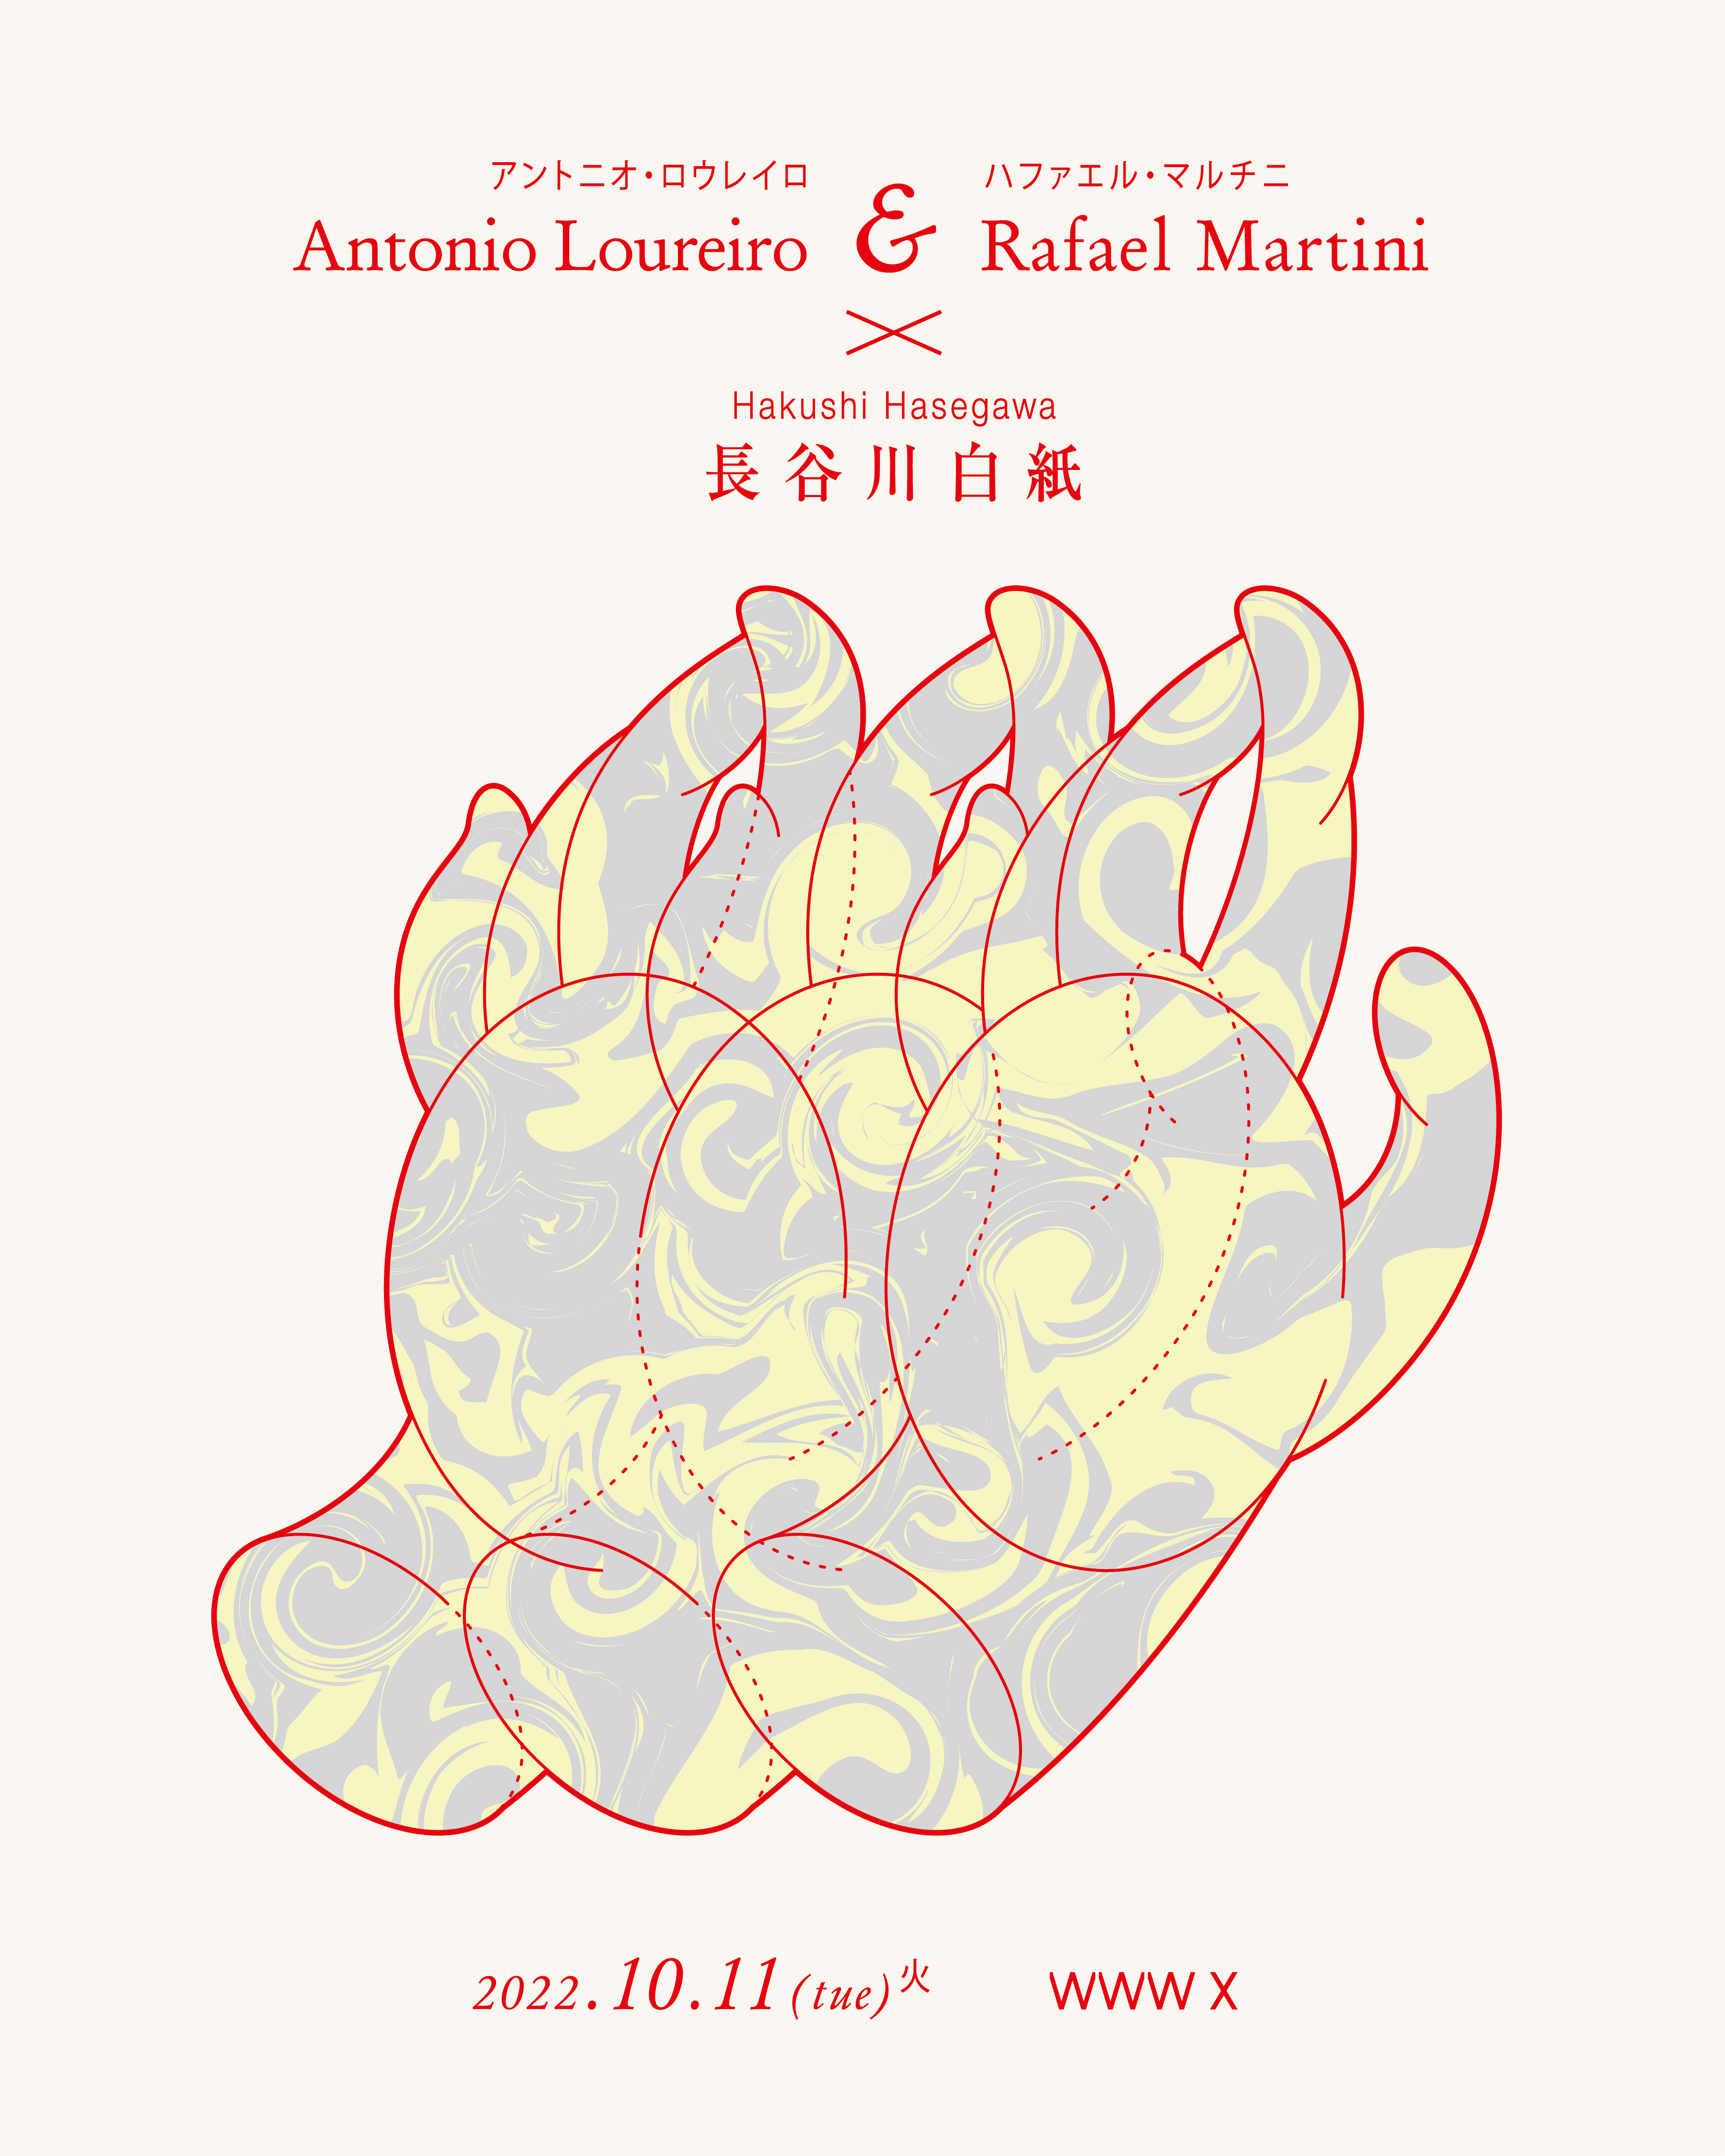 Antonio Loureiro & Rafael Martini / 長谷川白紙